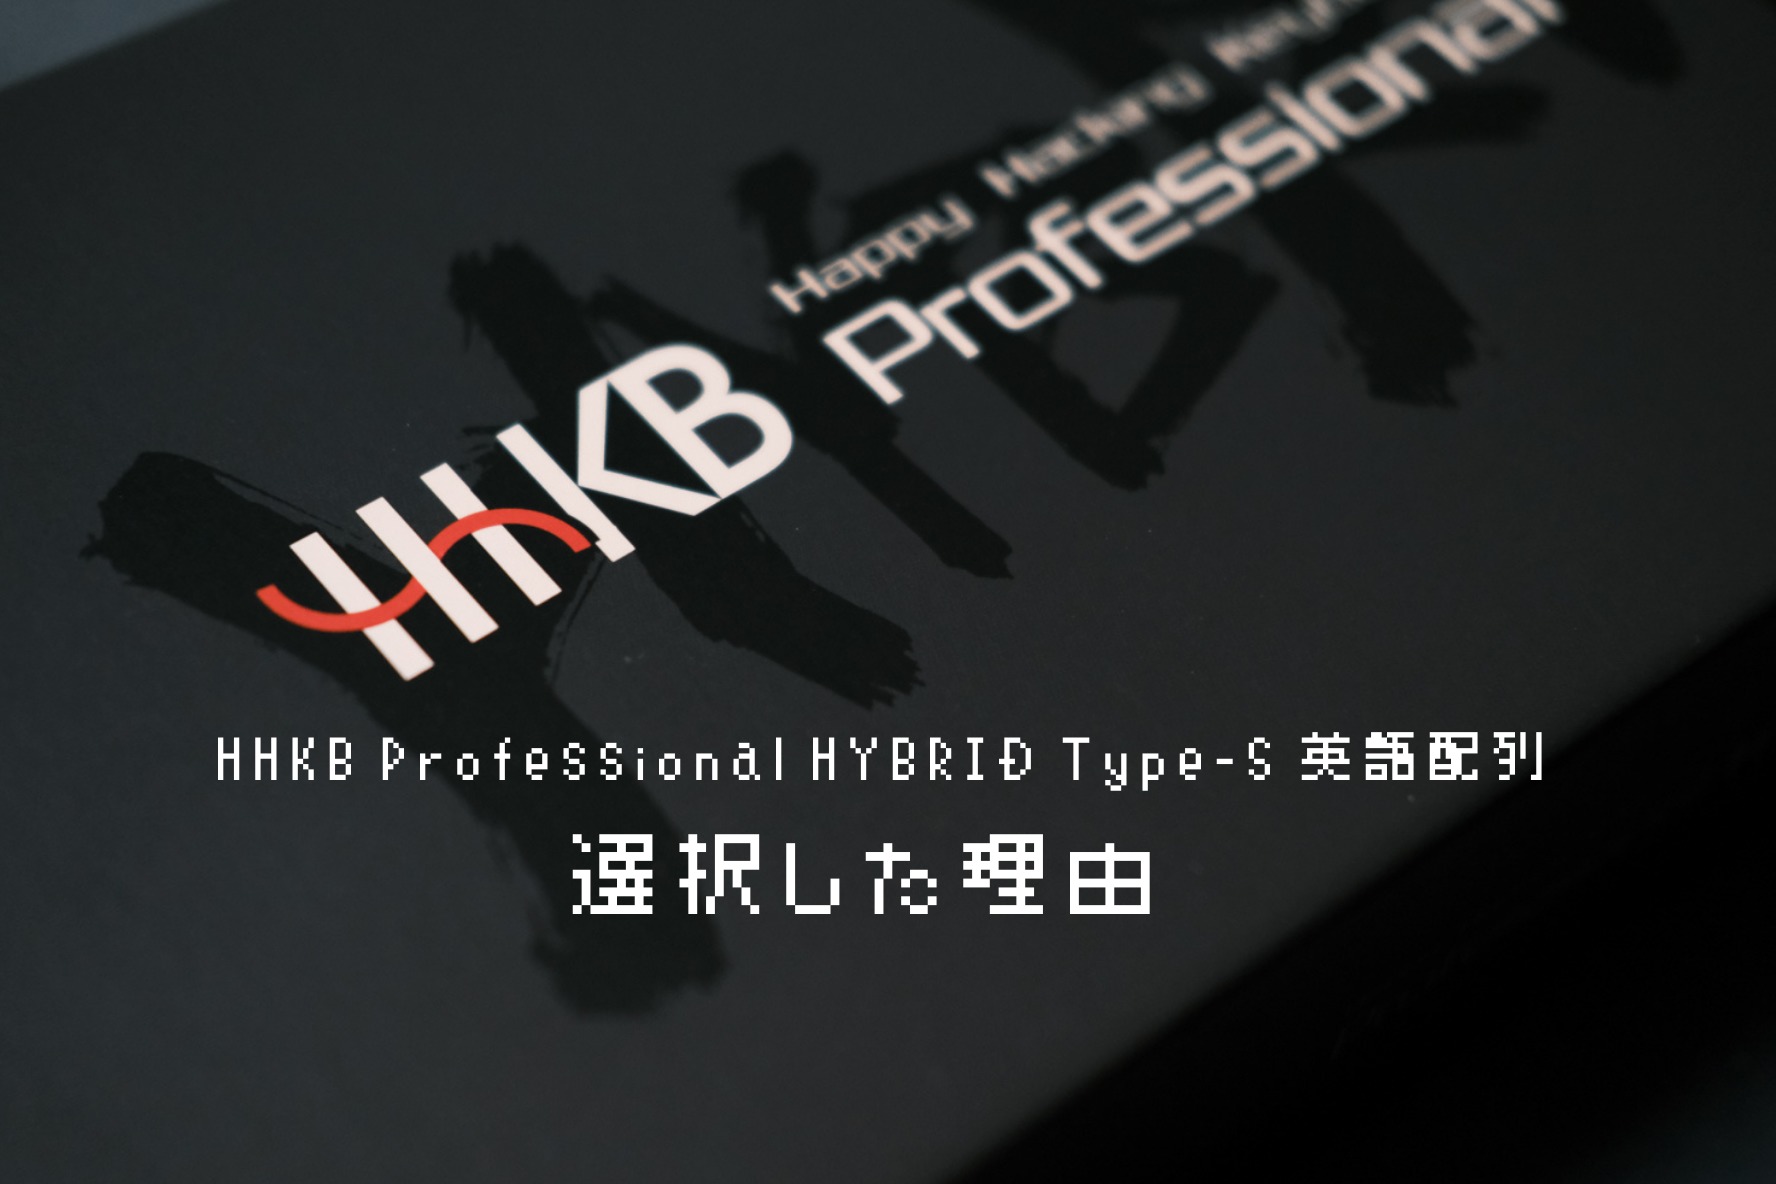 HHKB Professional HYBRID Type-S 英語配列を選択した理由 - akilans.com